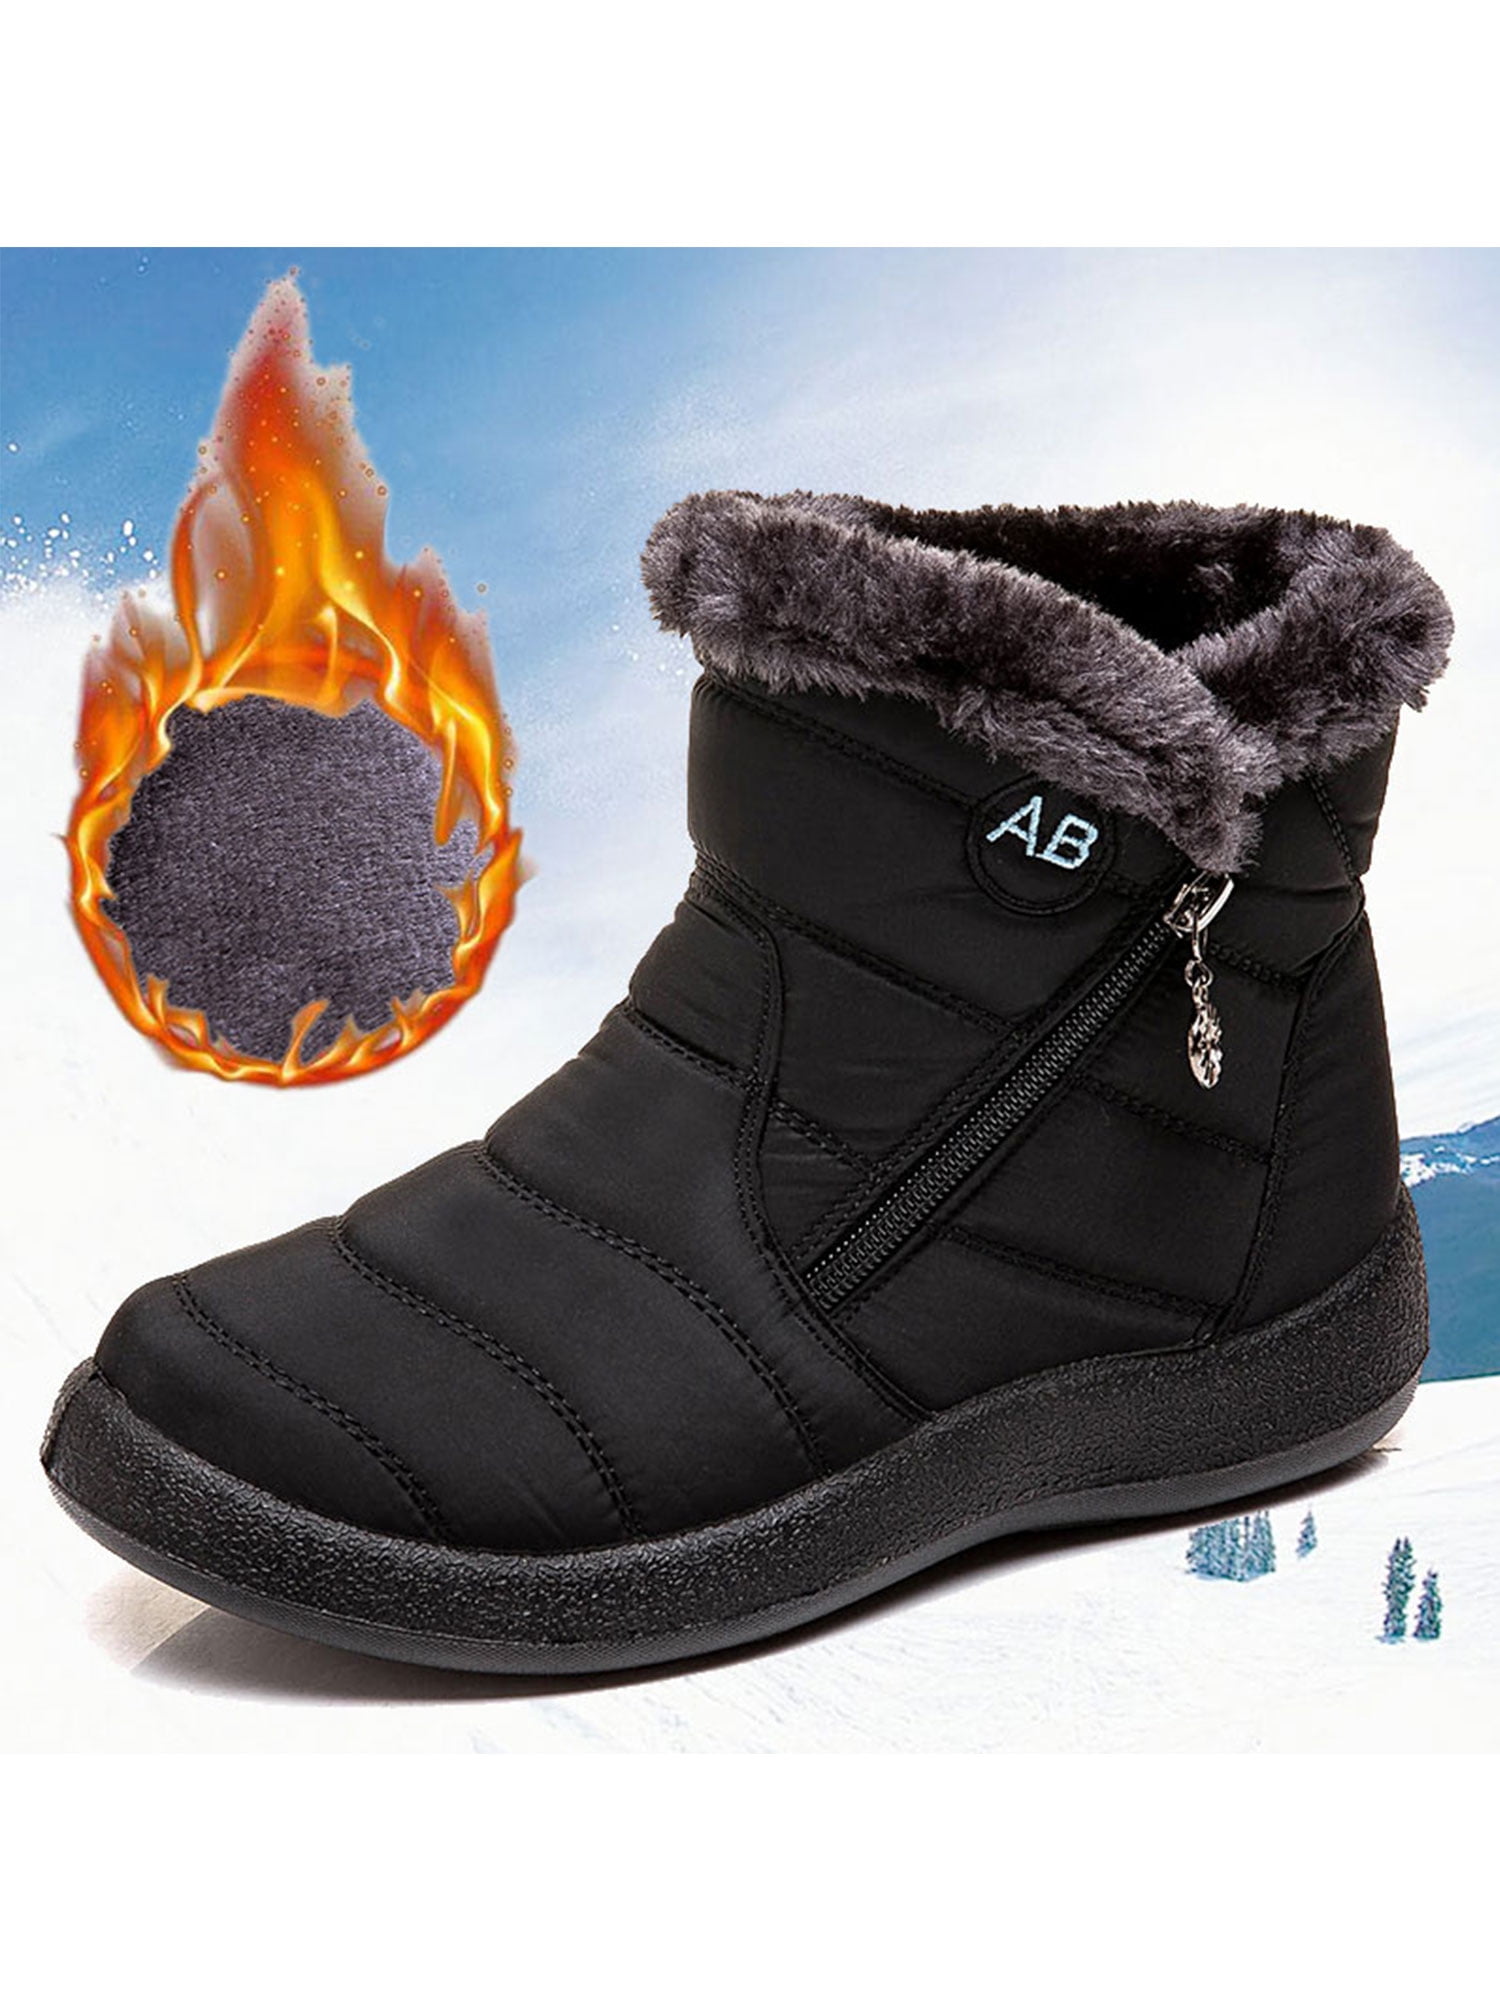 Ymiytan Womens Snow Boots Side Zippers Waterproof Winter Boots Comfort ...